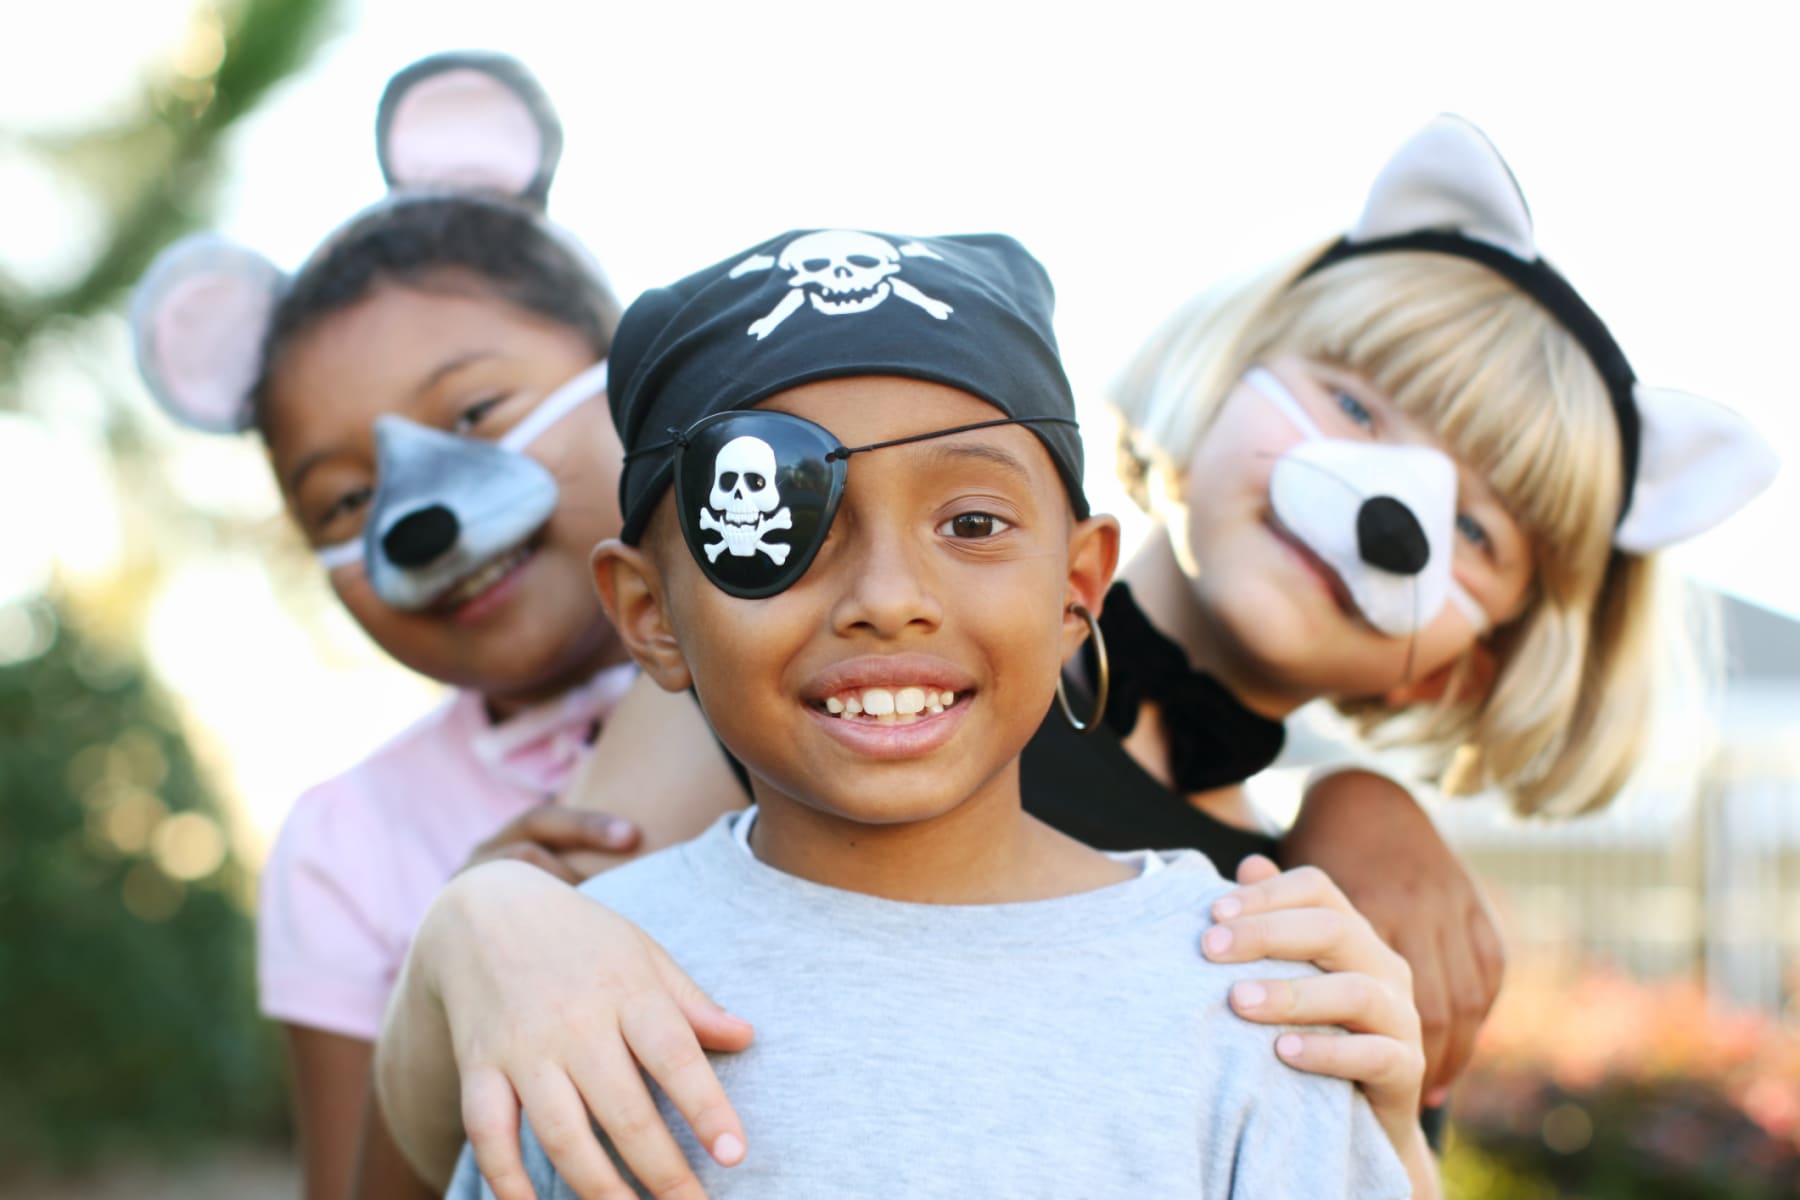 Three kids wearing Halloween costumes pose for camera.